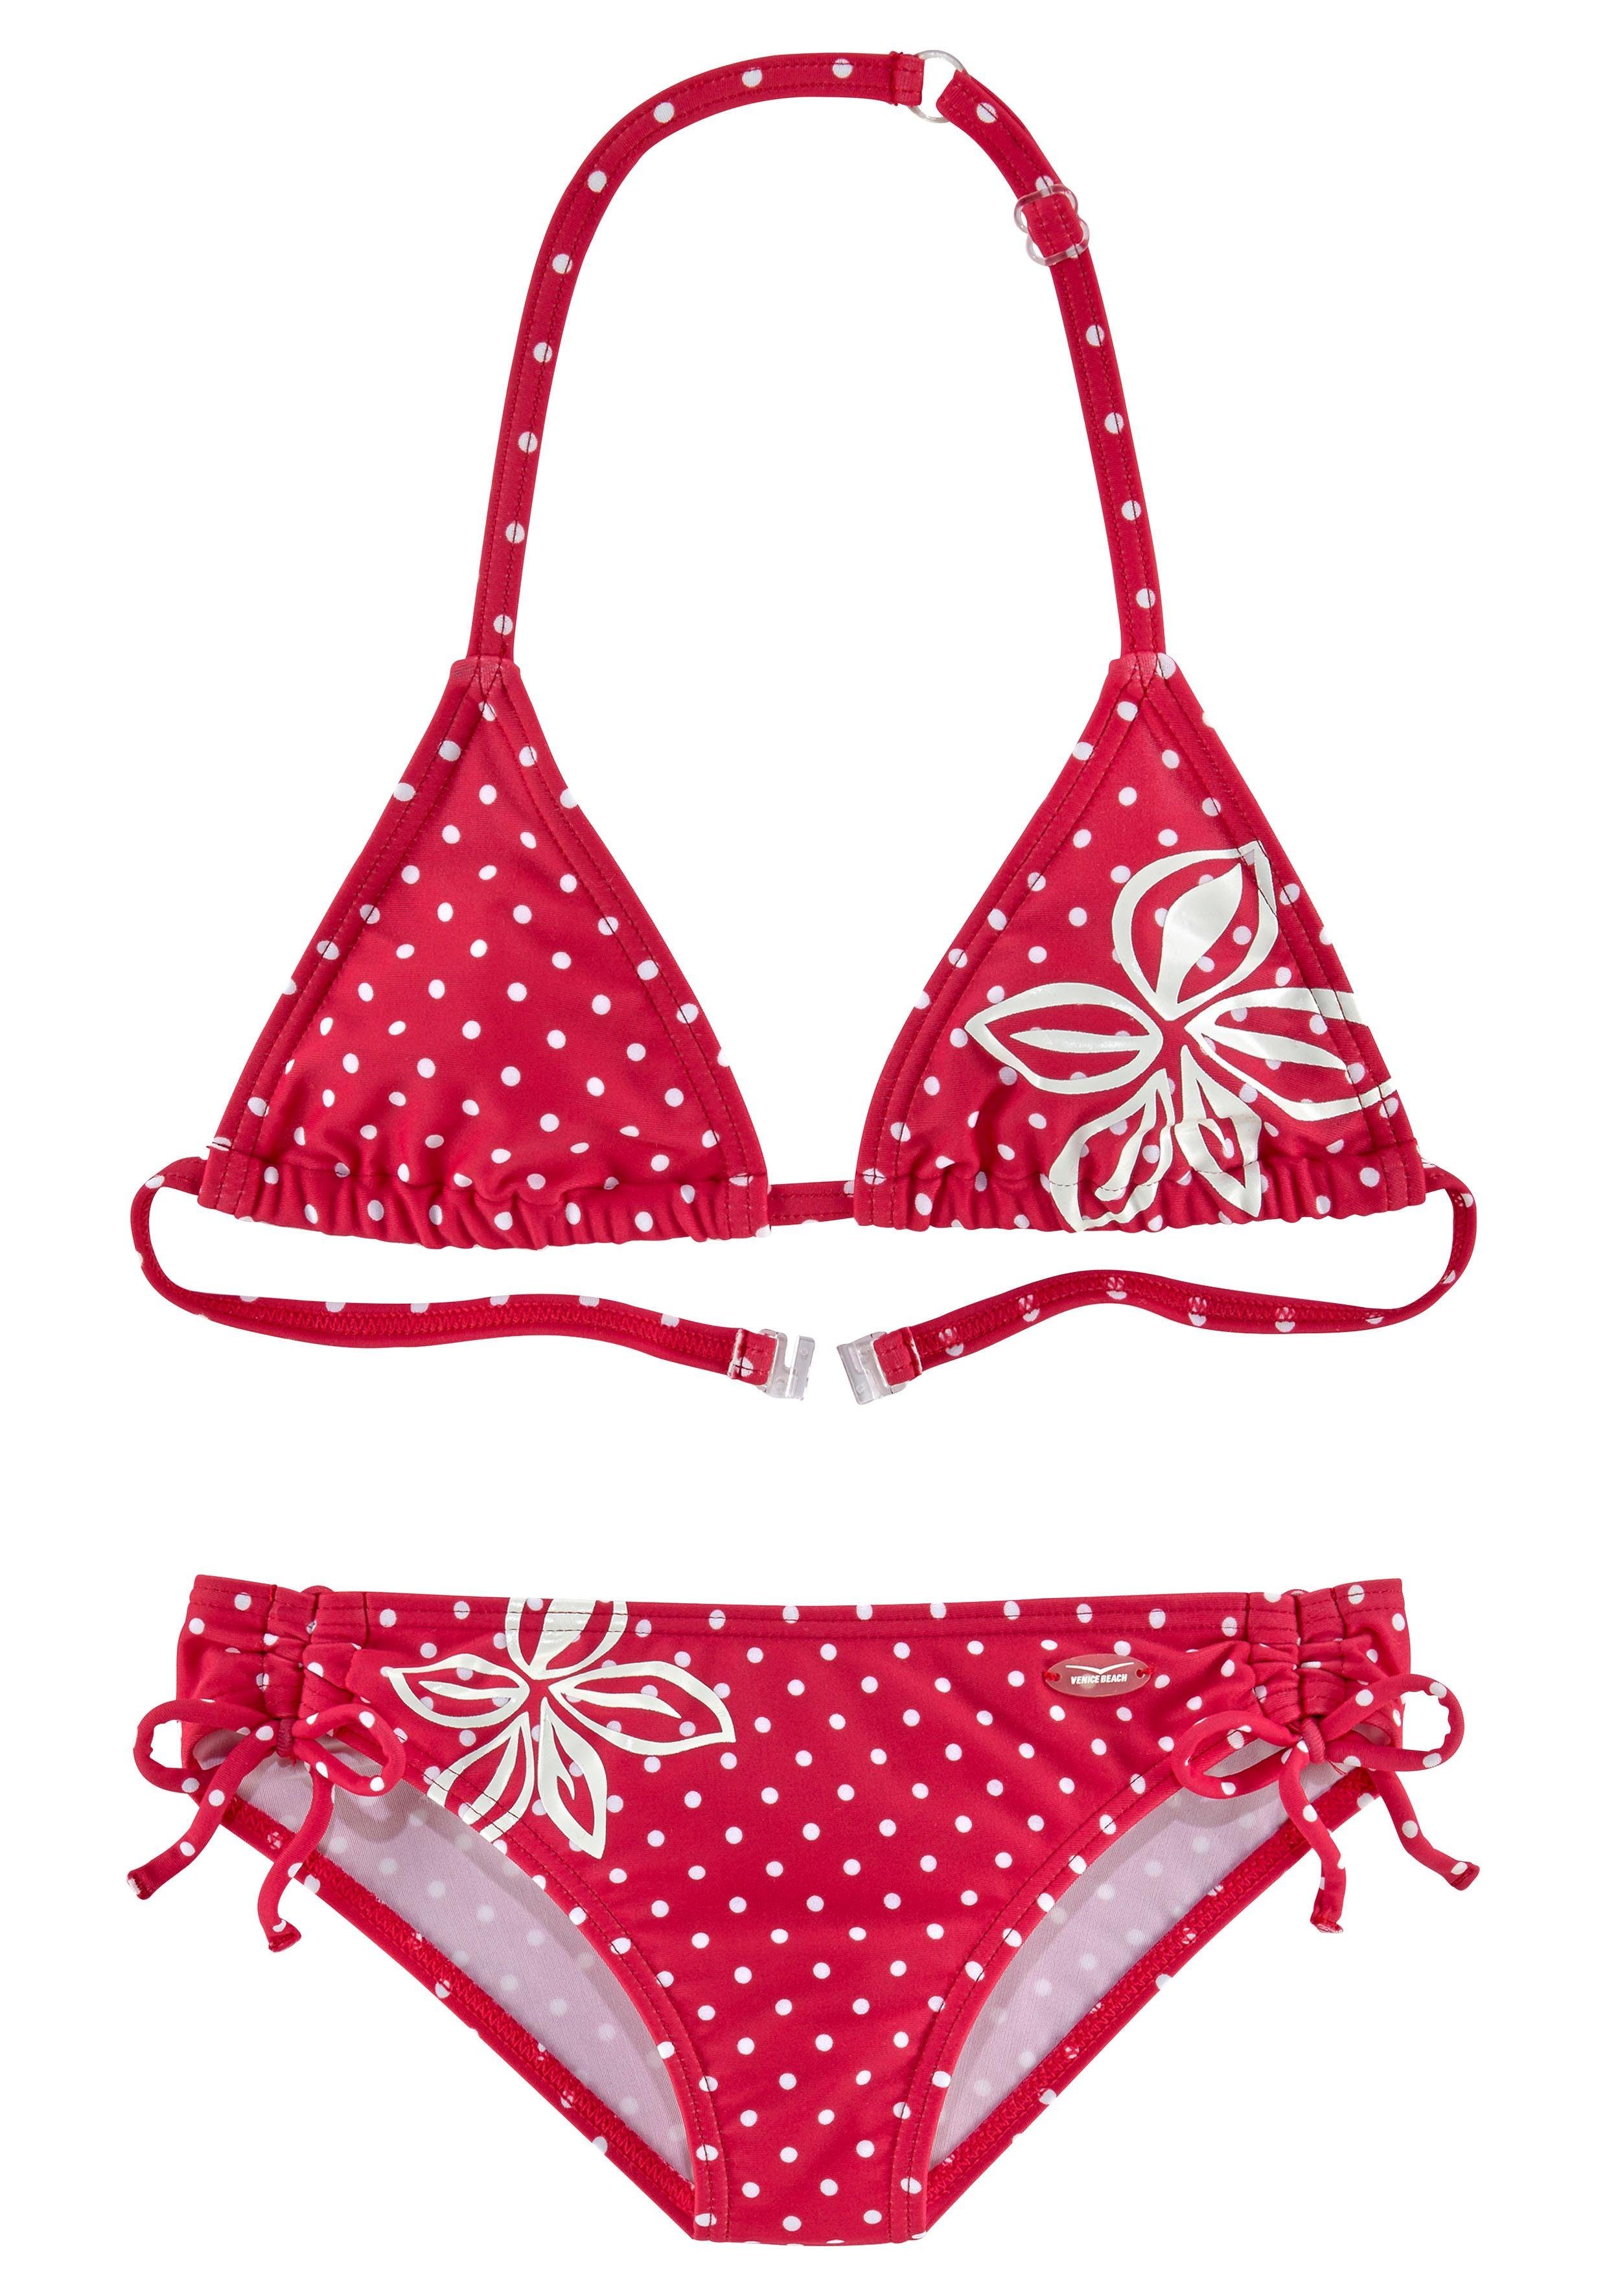 rot Venice Beach modischen Triangel-Bikini im Punkte-Design